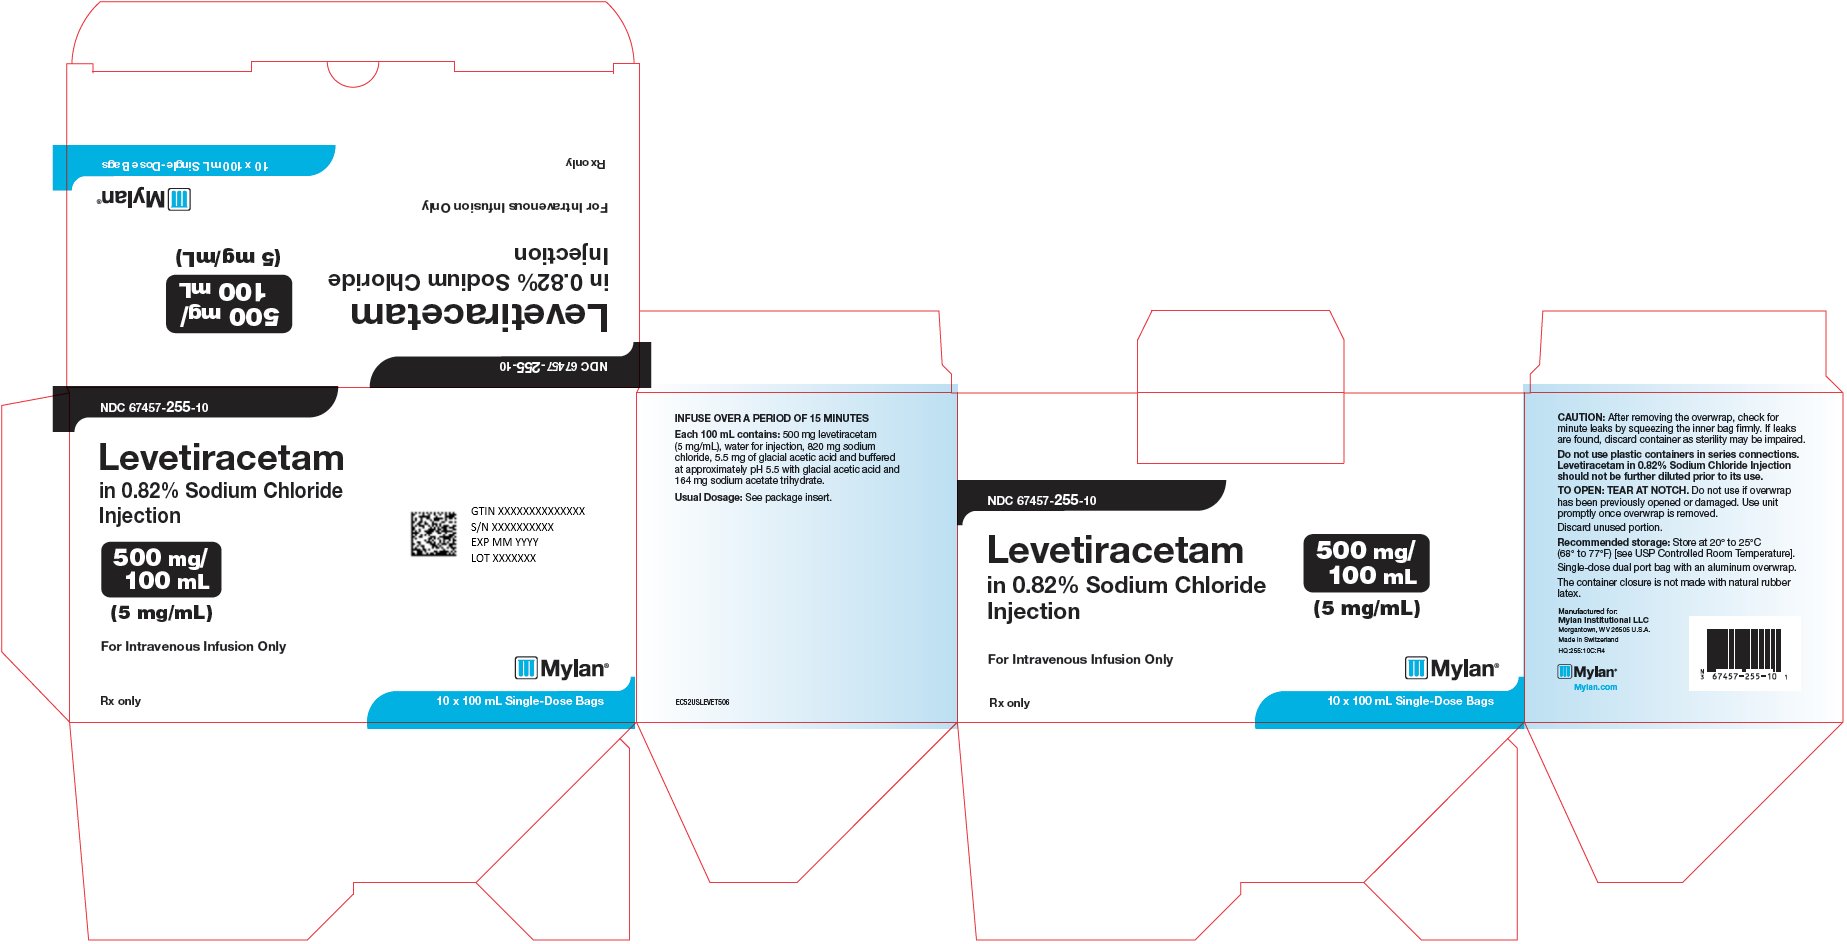 Levetiracetam Injection 500 mg/100 mL Carton Label